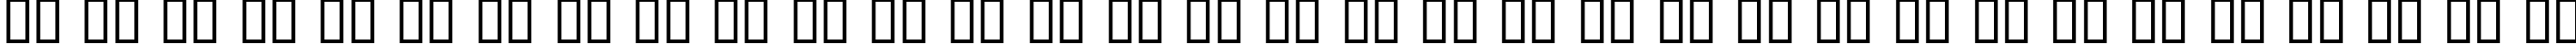 Пример написания русского алфавита шрифтом Albino